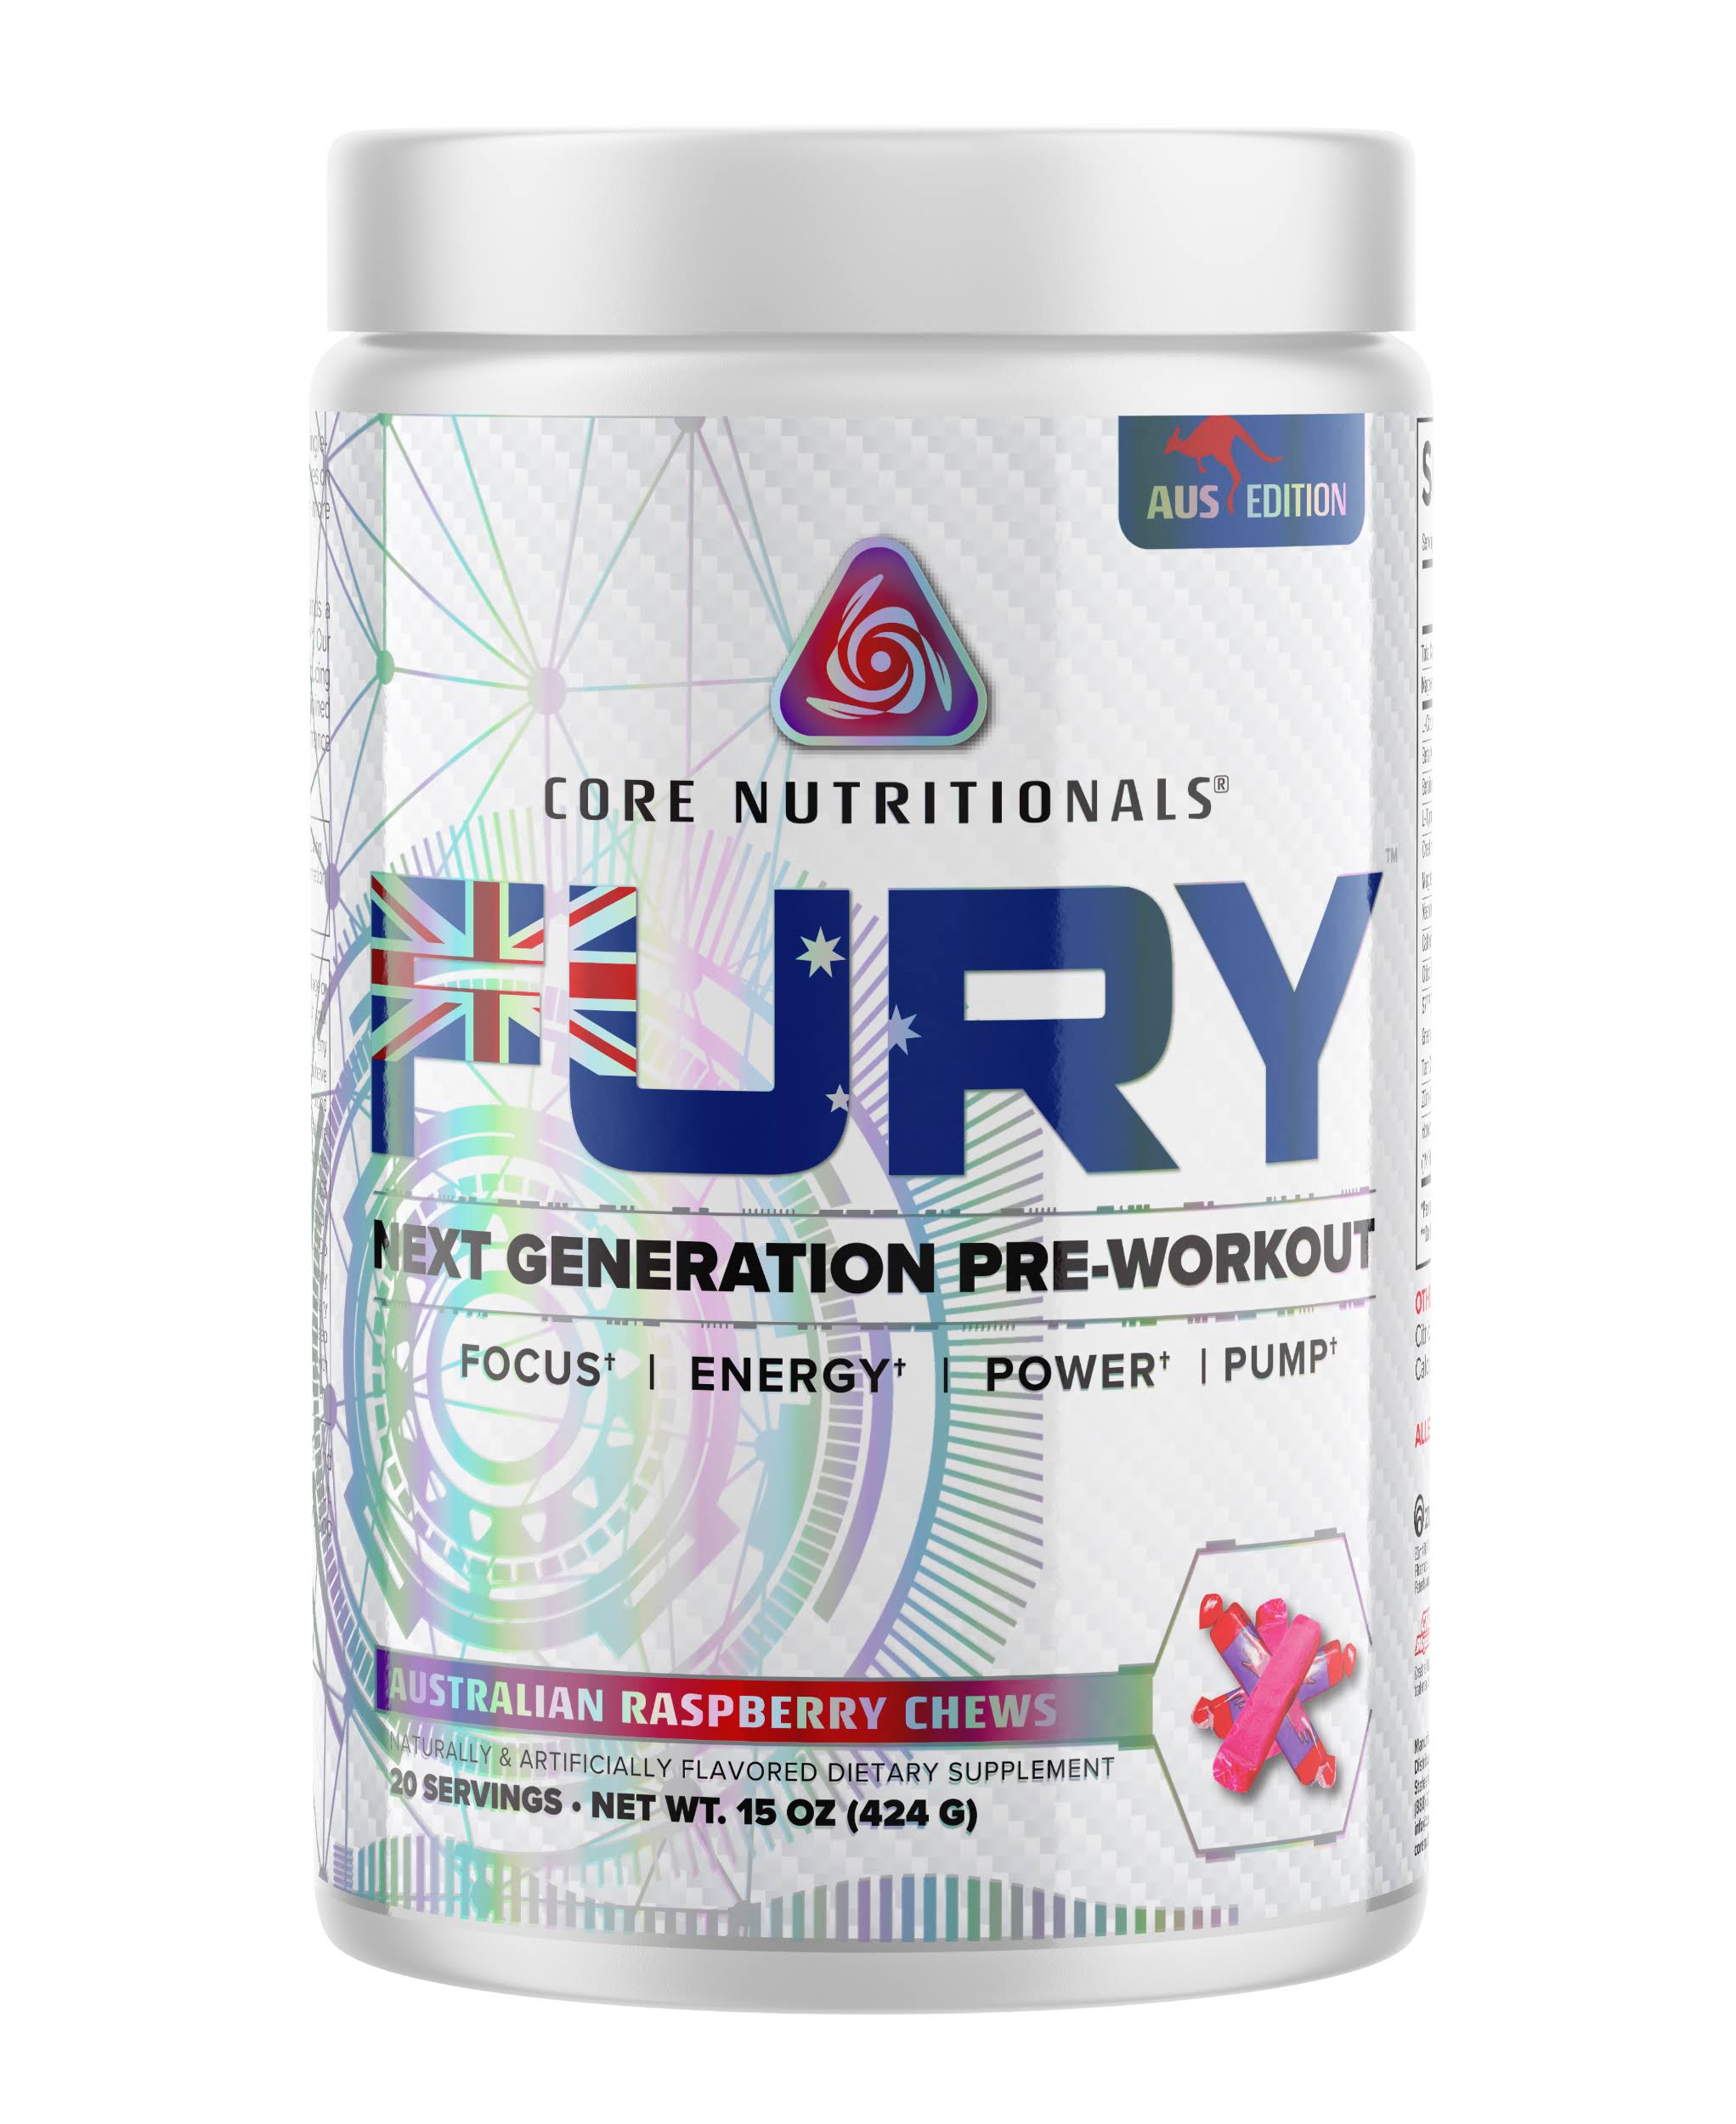 Core Nutritionals Fury aus Edition Raspberry Chews - 40 Servings